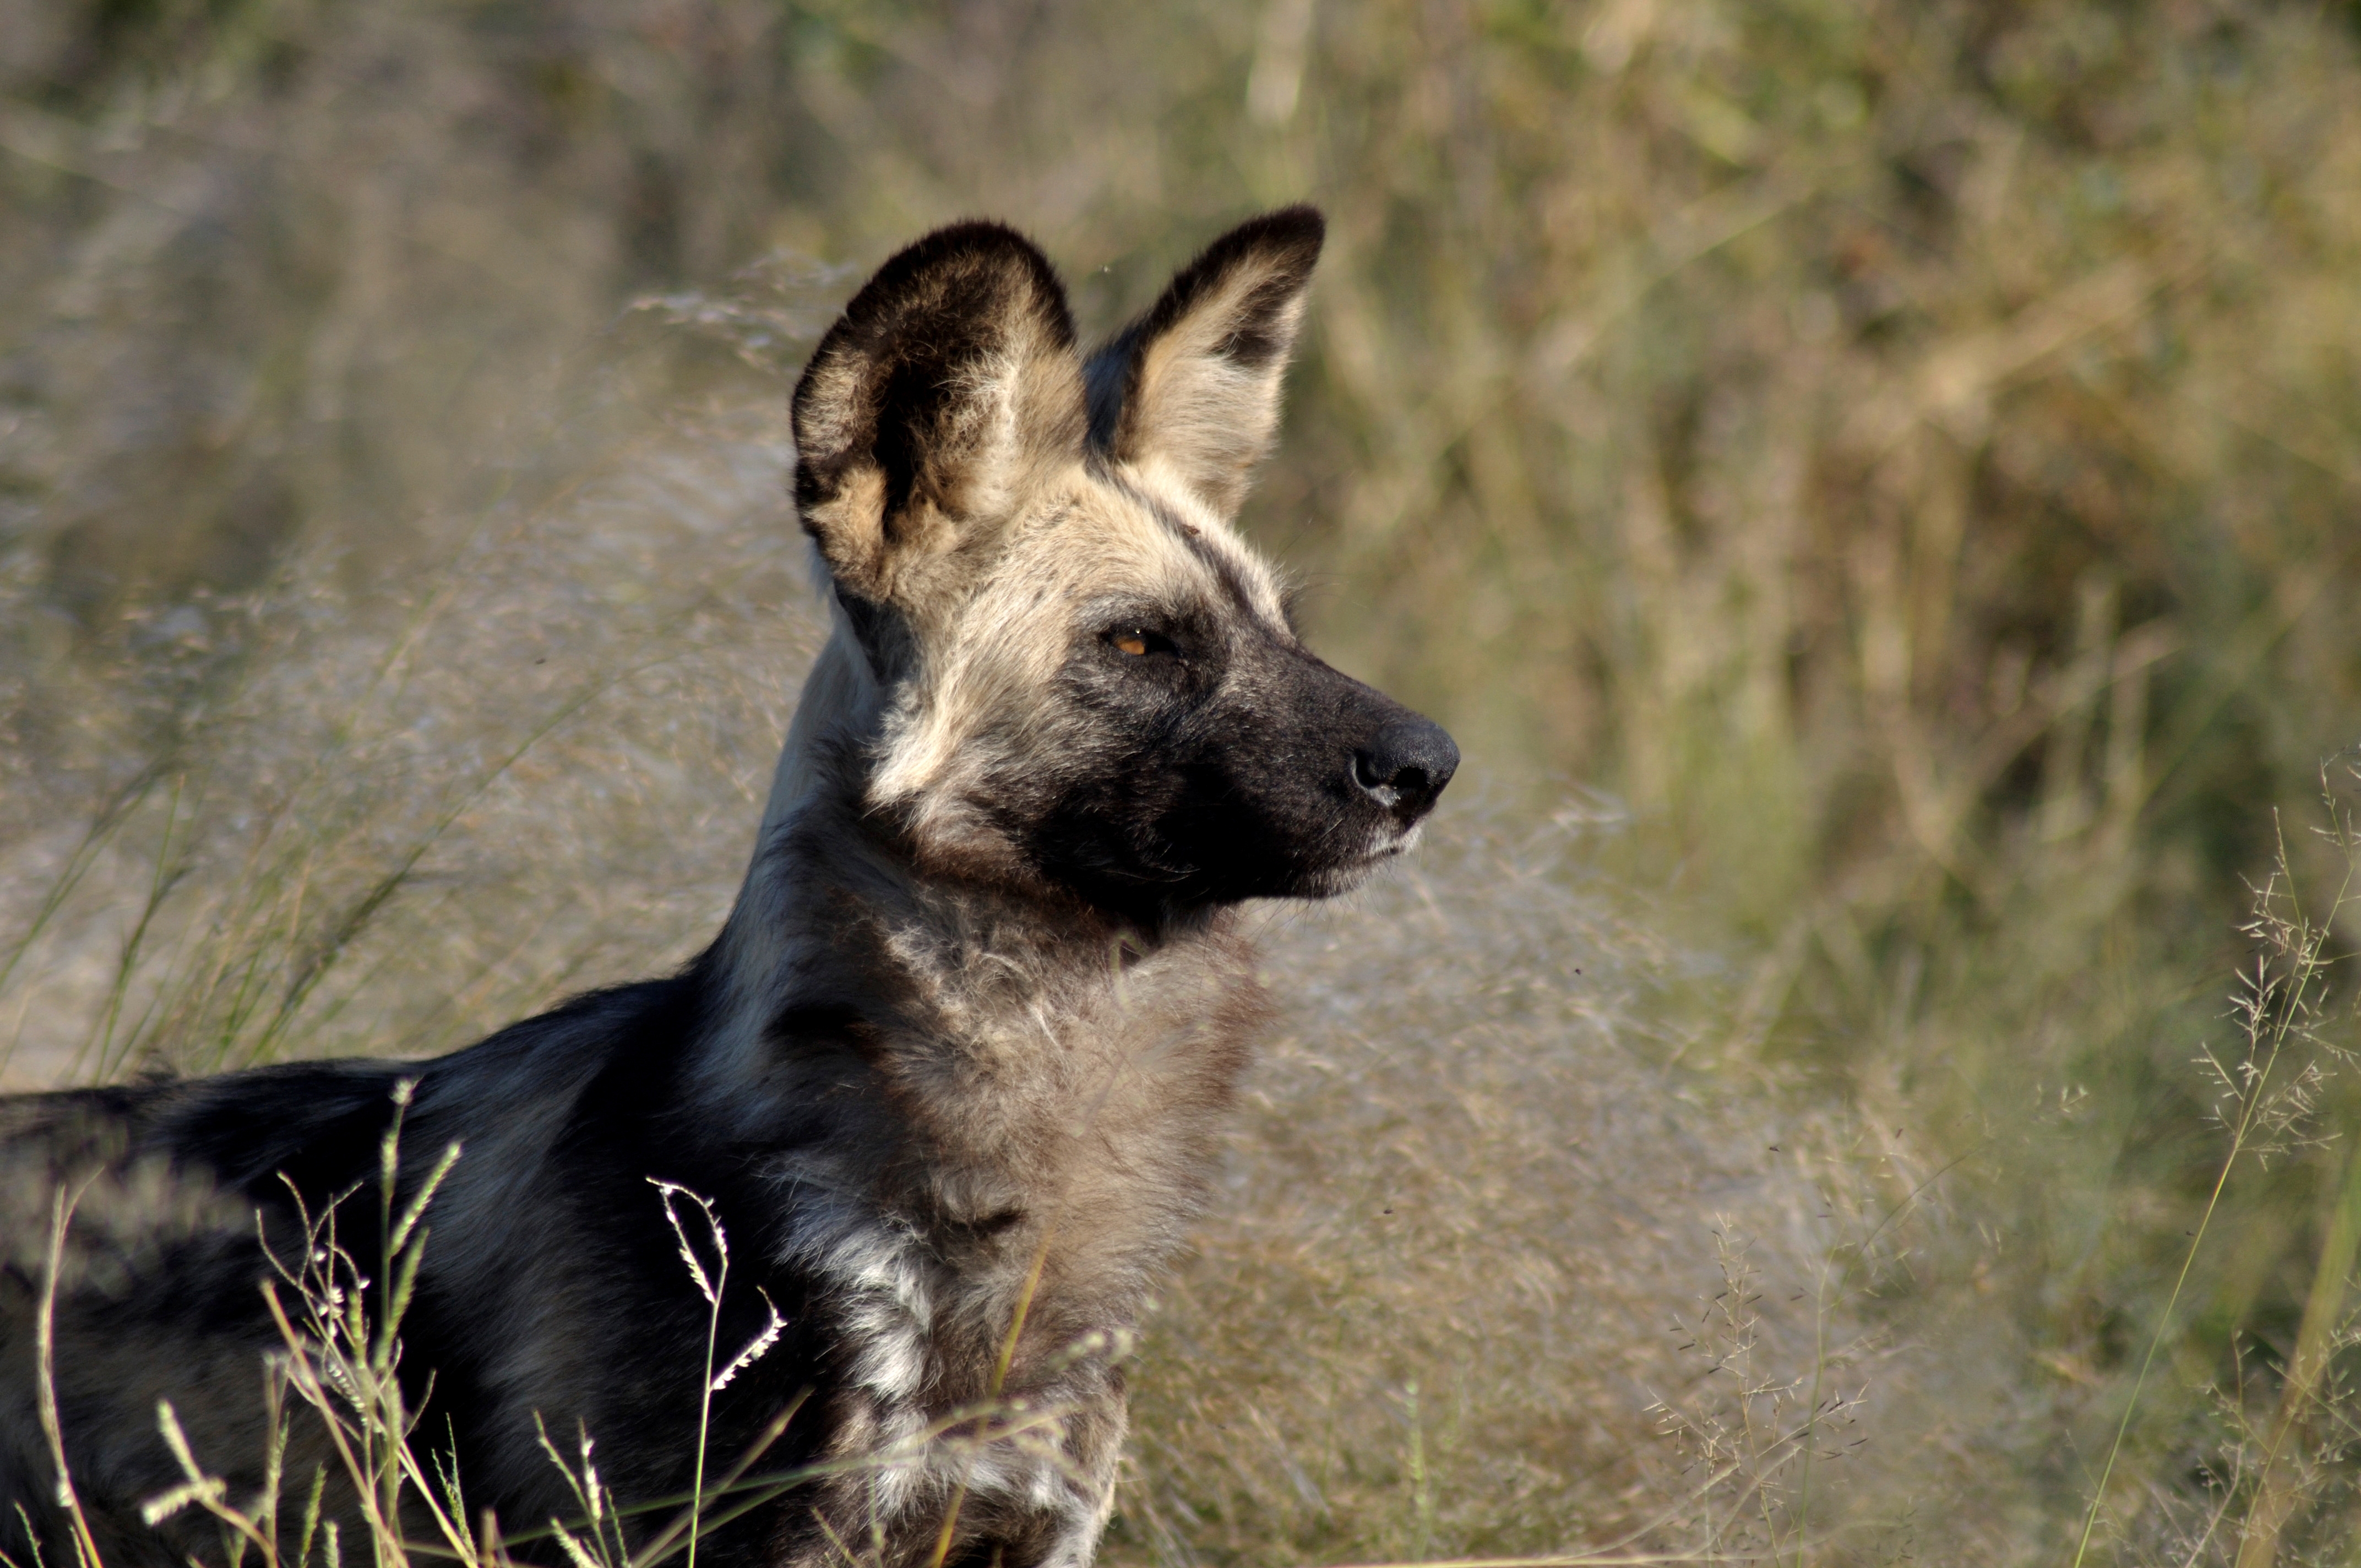 Botswana: Wilddog